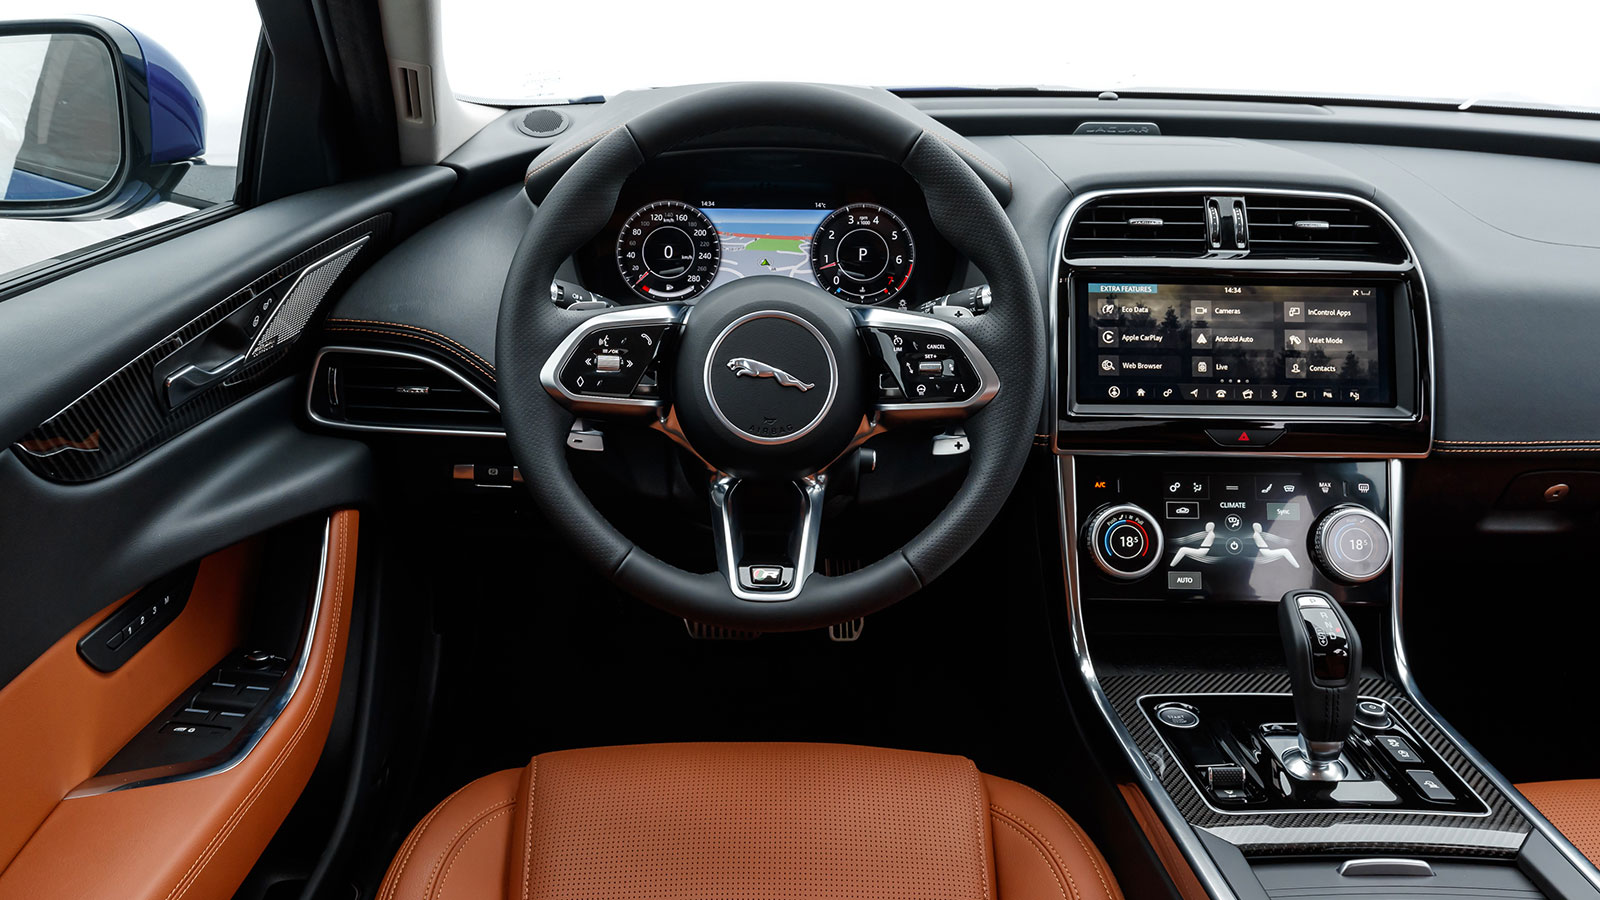 Forward motion: Test driving the new Jaguar XE